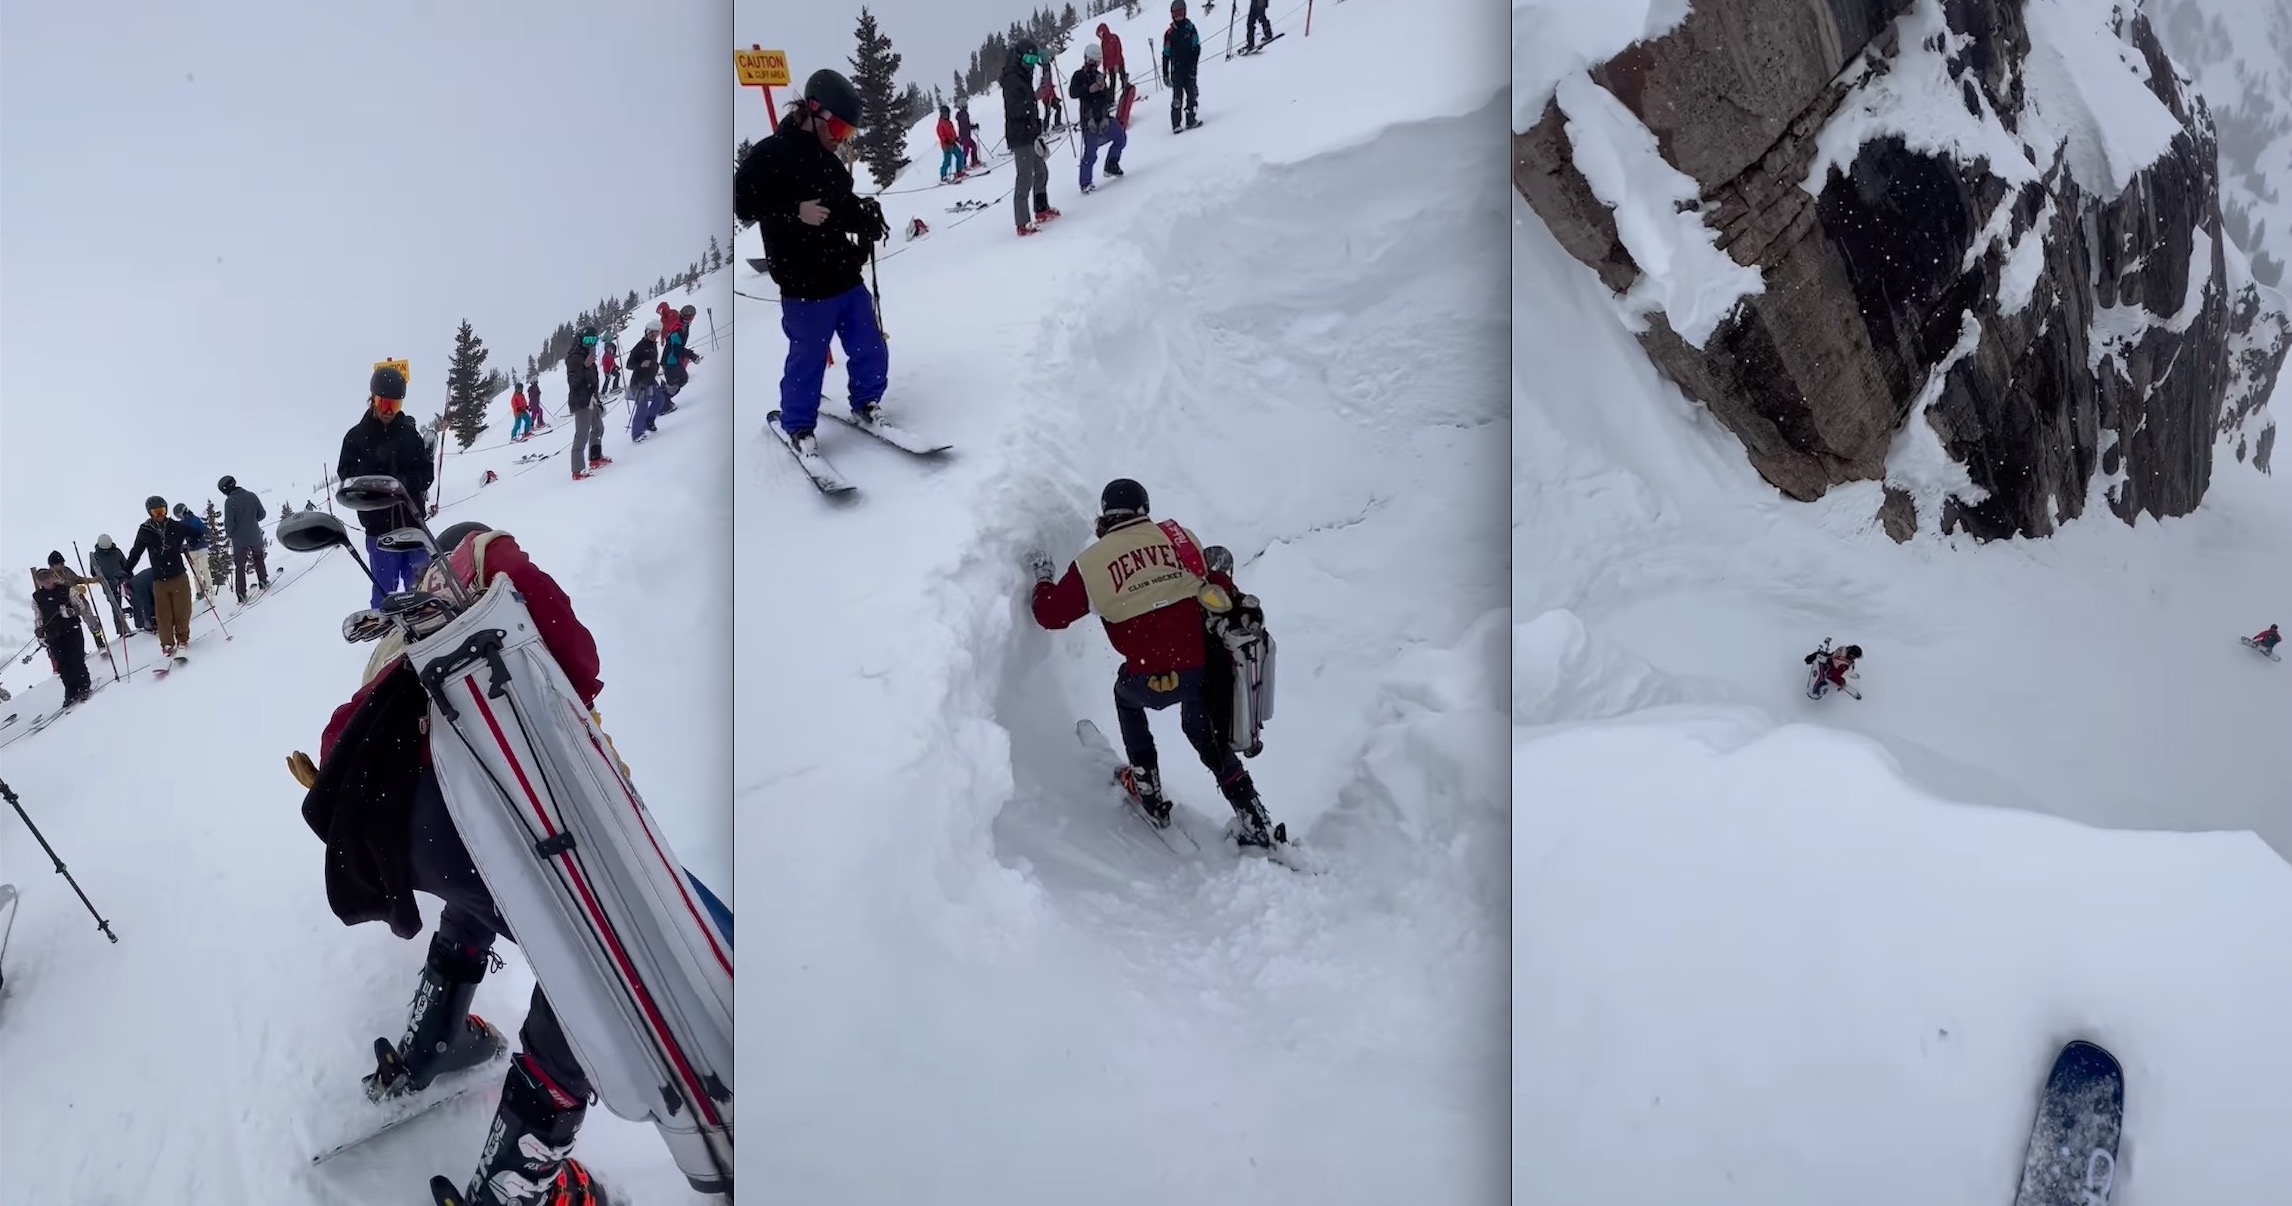 VIDEO: Jackson Hole Skier Sends Corbet's Couloir With A Golf Bag